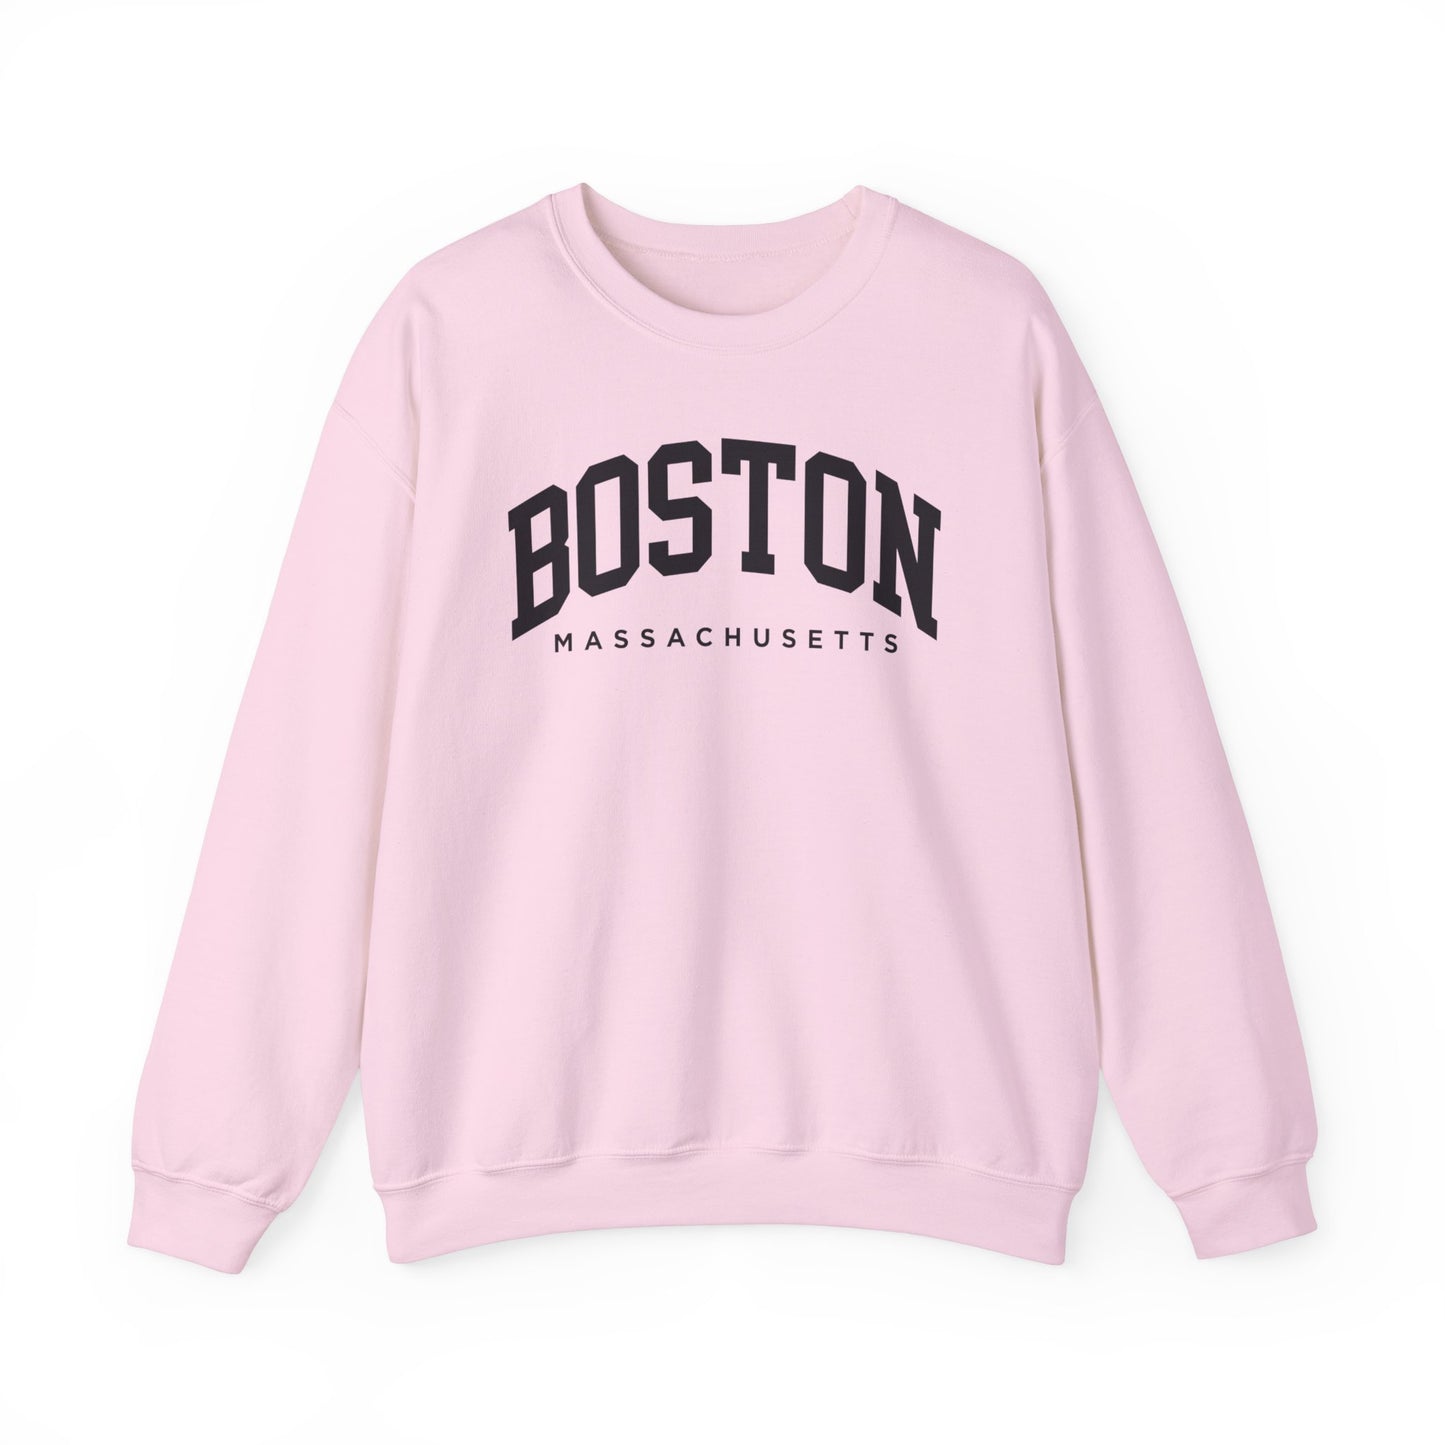 Boston Massachusetts Sweatshirt